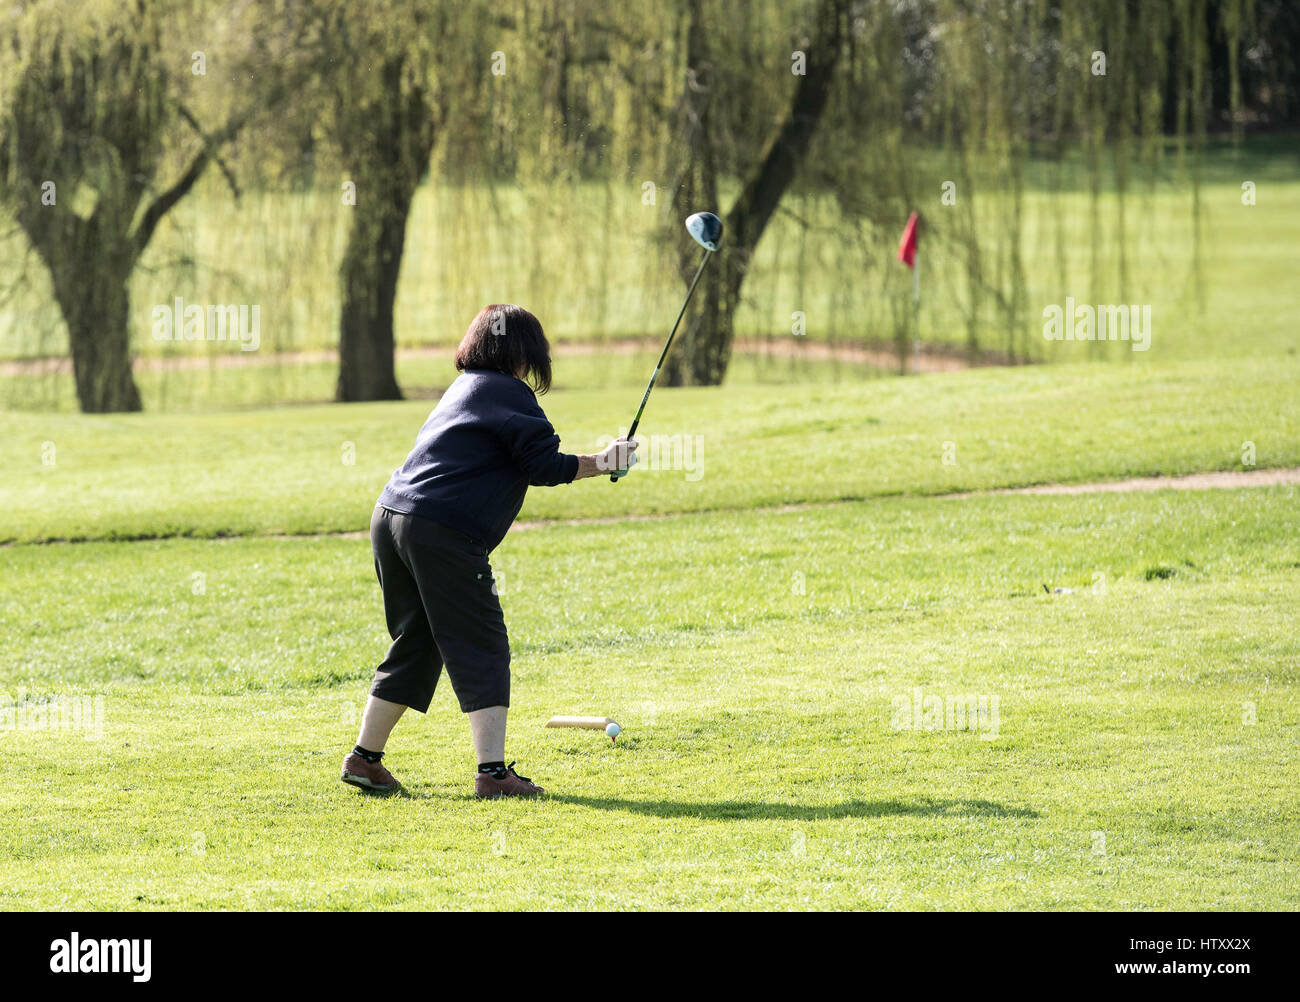 Senior lady golfer takes a swing Stock Photo